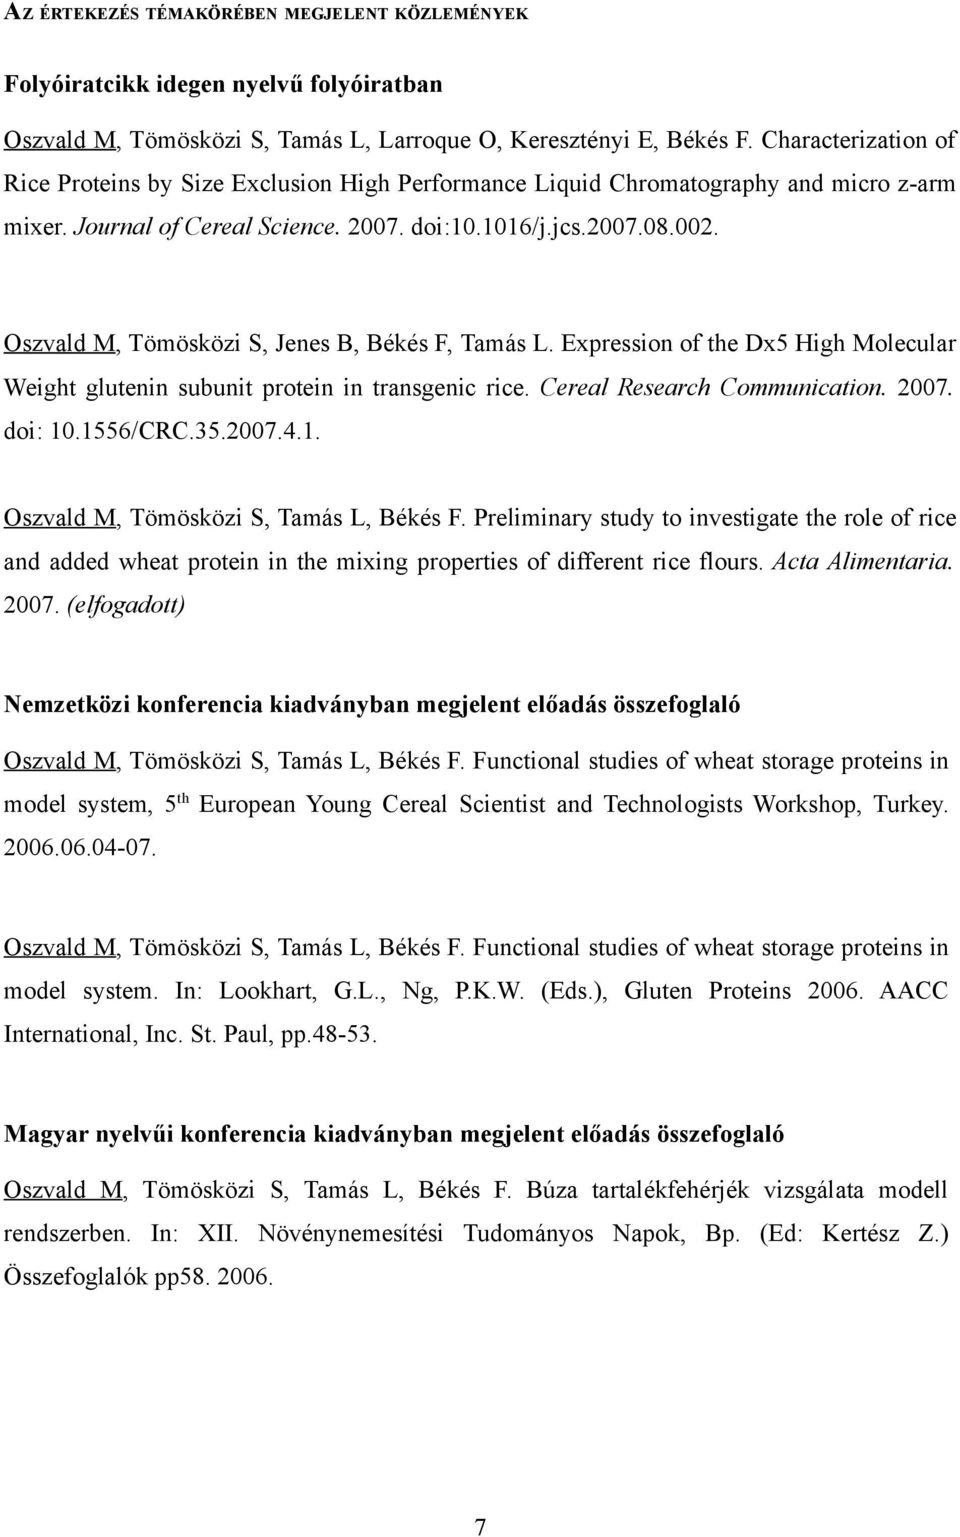 Oszvald M, Tömösközi S, Jenes B, Békés F, Tamás L. Expression of the Dx5 High Molecular Weight glutenin subunit protein in transgenic rice. Cereal Research Communication. 2007. doi: 10.1556/CRC.35.